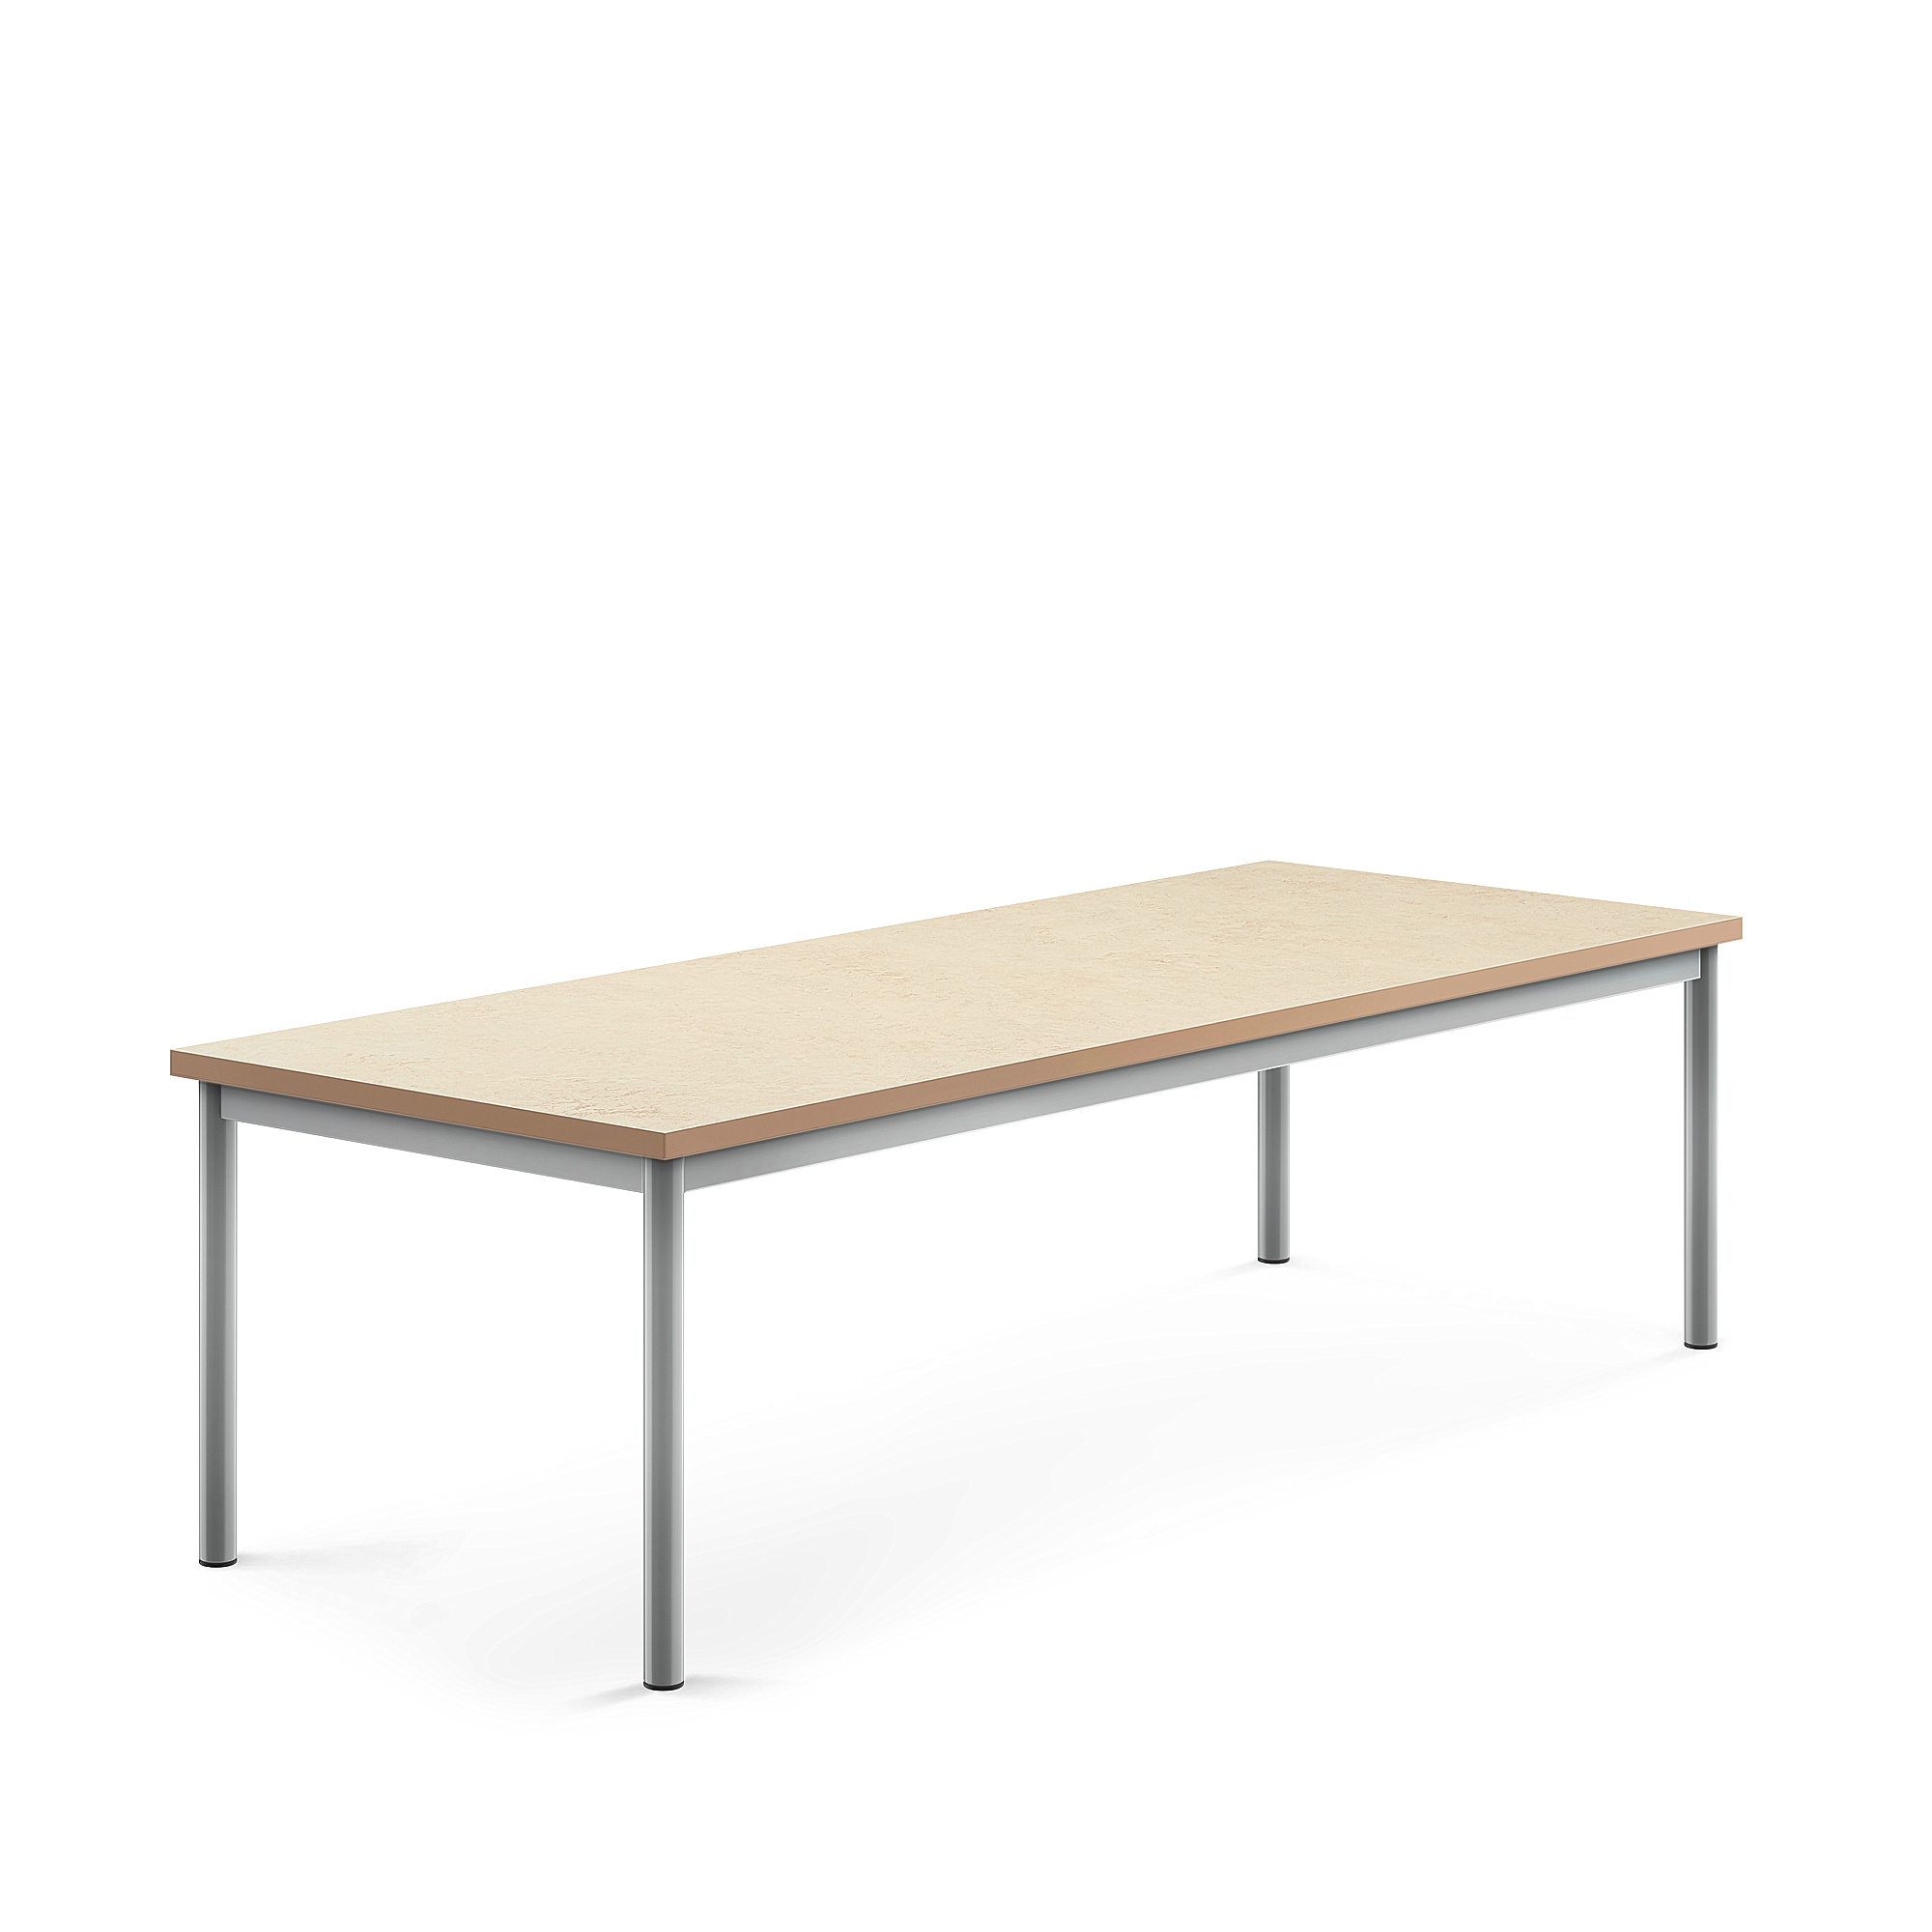 Stůl SONITUS, 1800x700x500 mm, stříbrné nohy, deska s linoleem, béžová